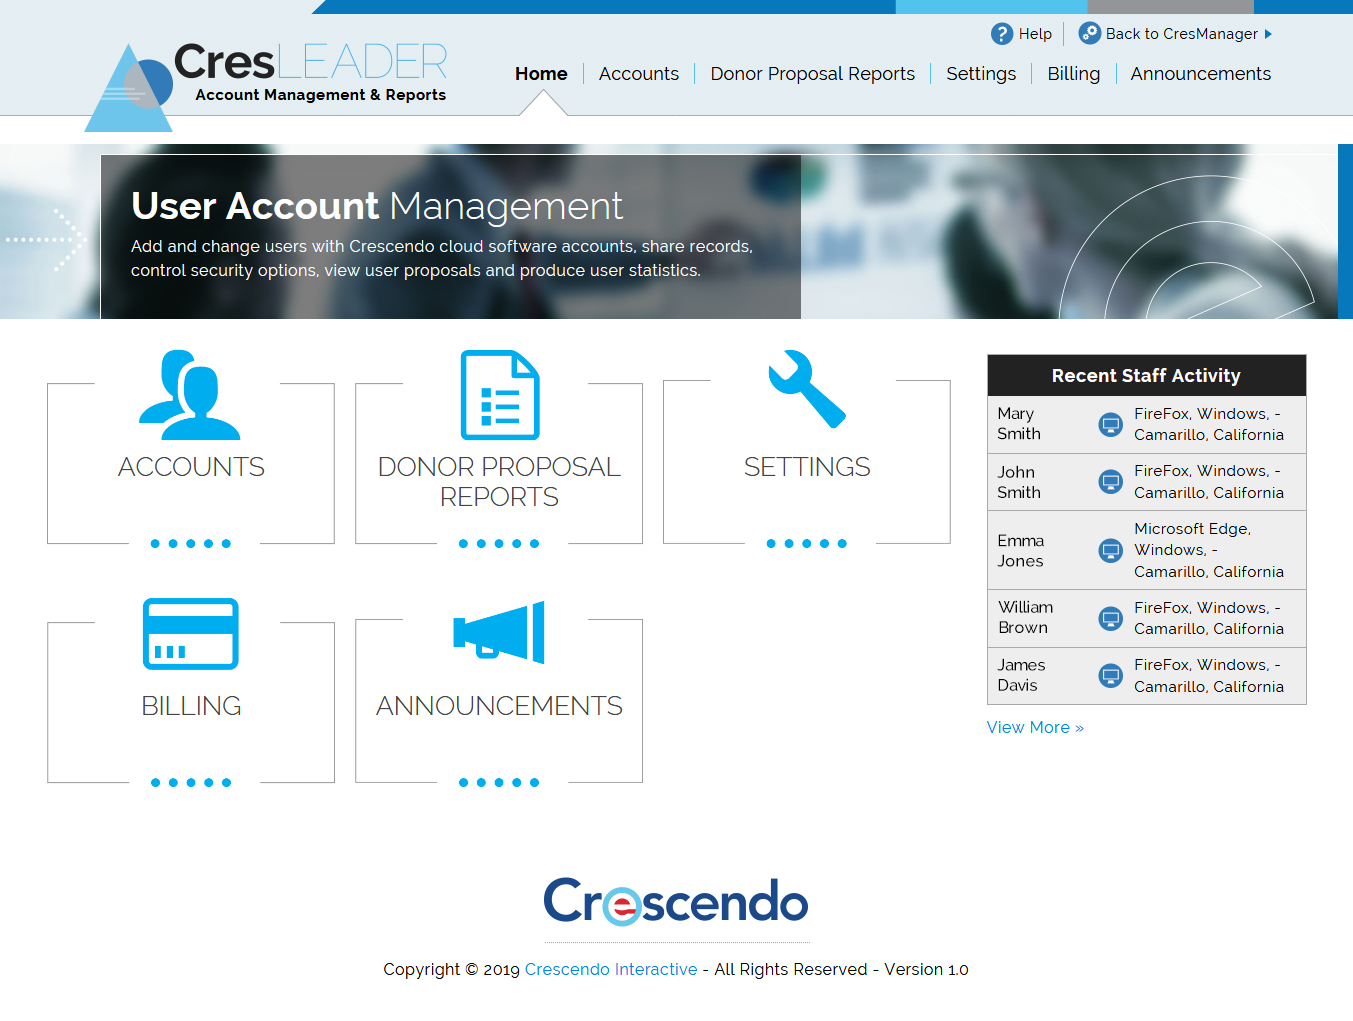 CresLeader Home Page